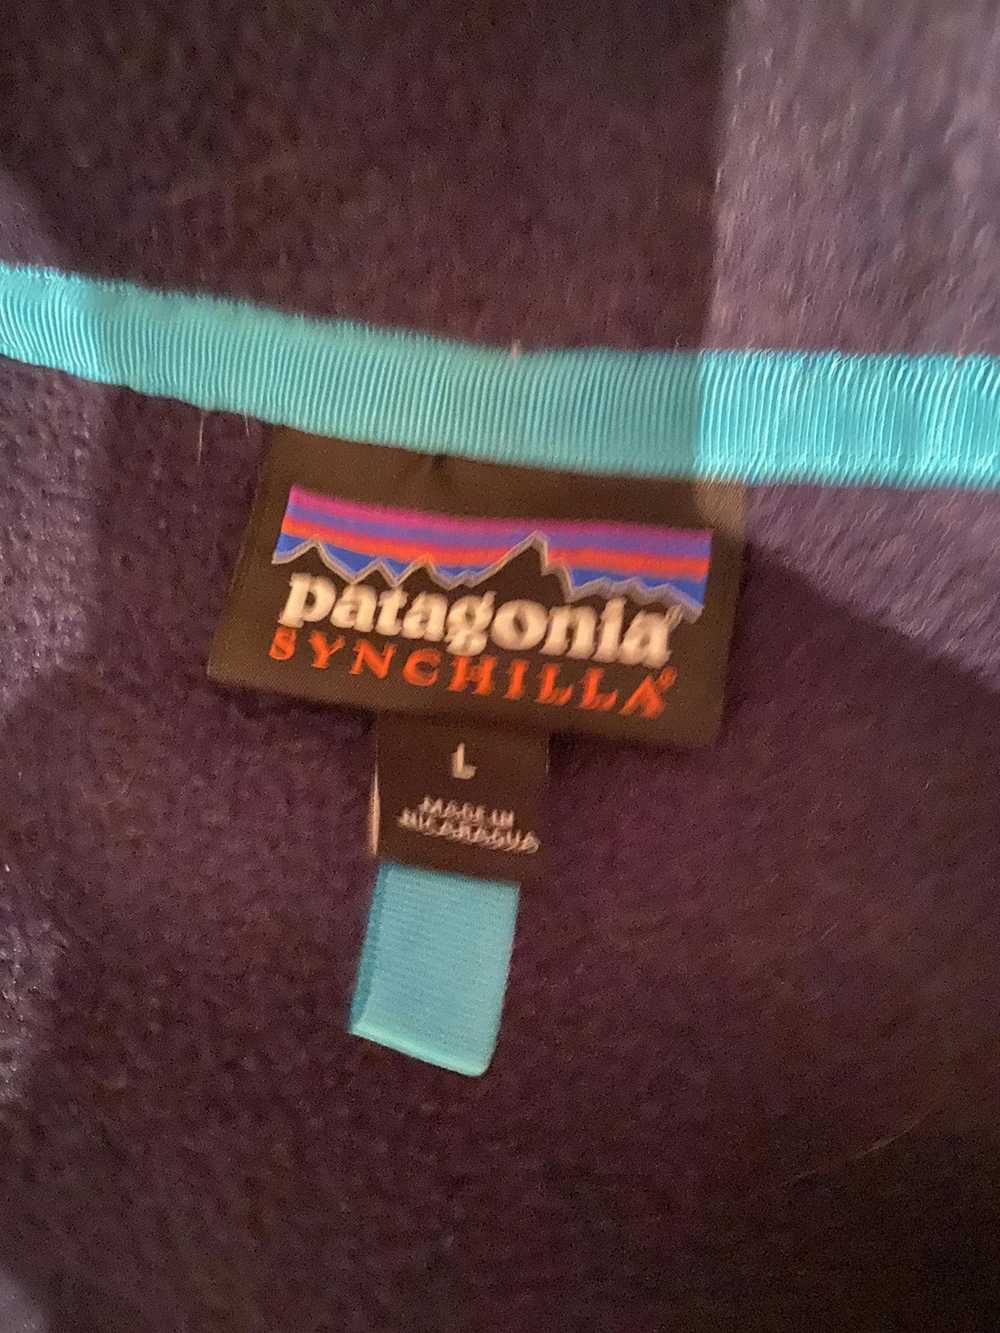 Patagonia Patagonia Synchilla Size L - image 3